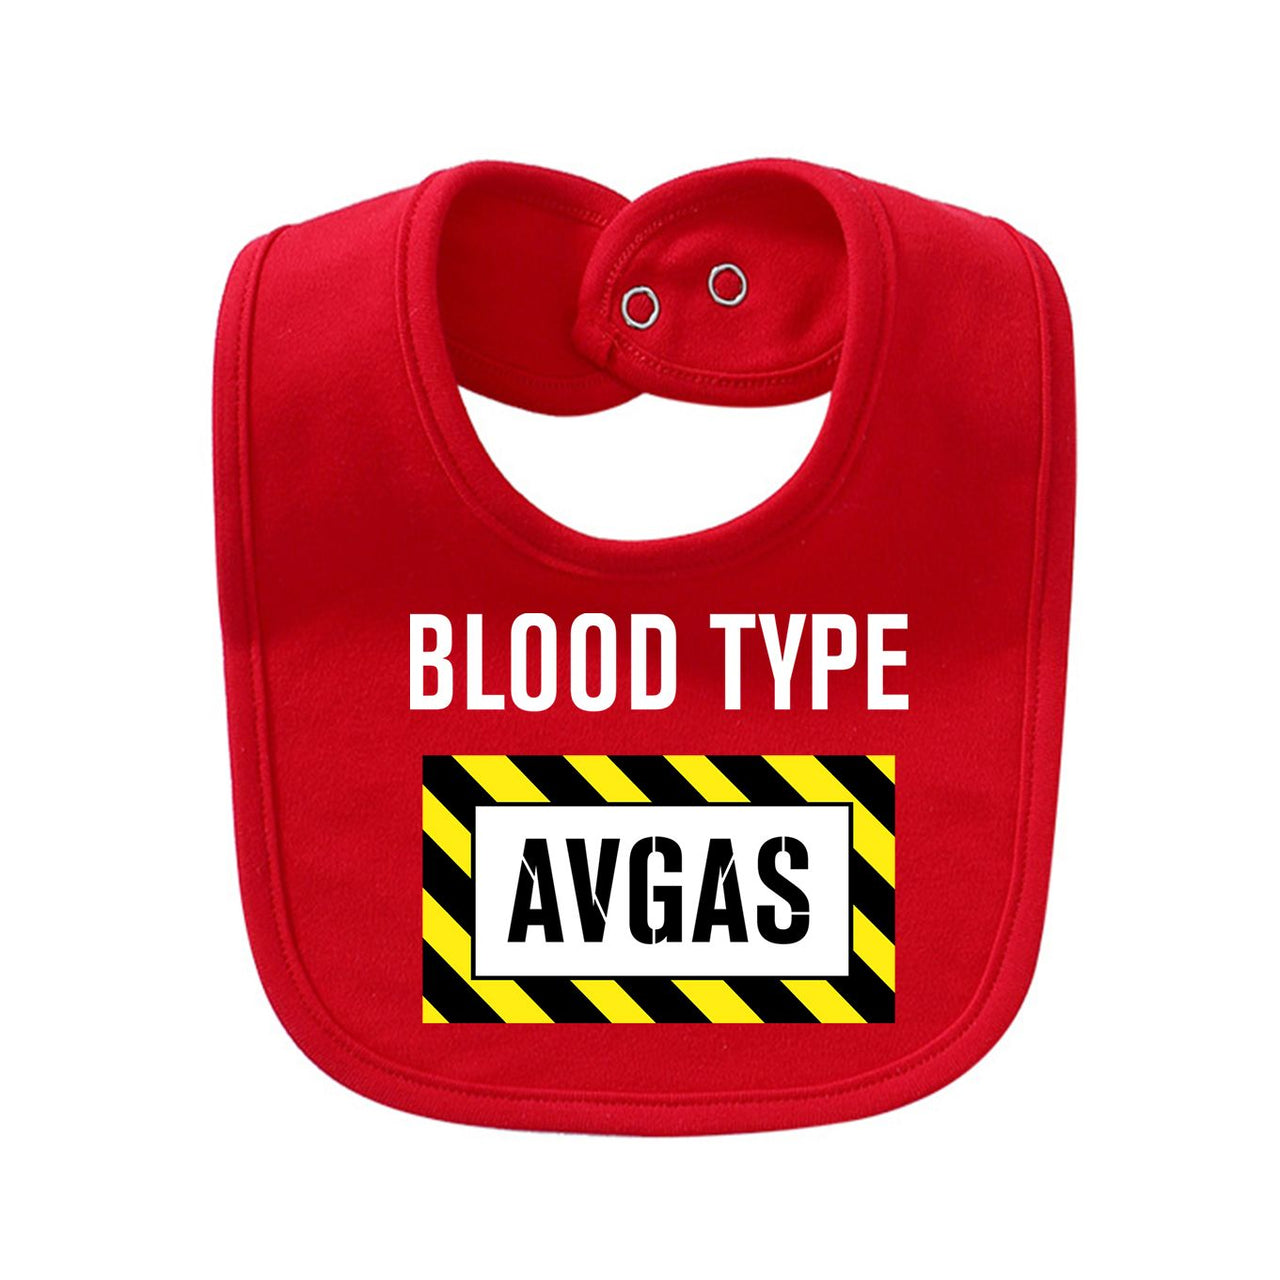 Blood Type AVGAS Designed Baby Saliva & Feeding Towels